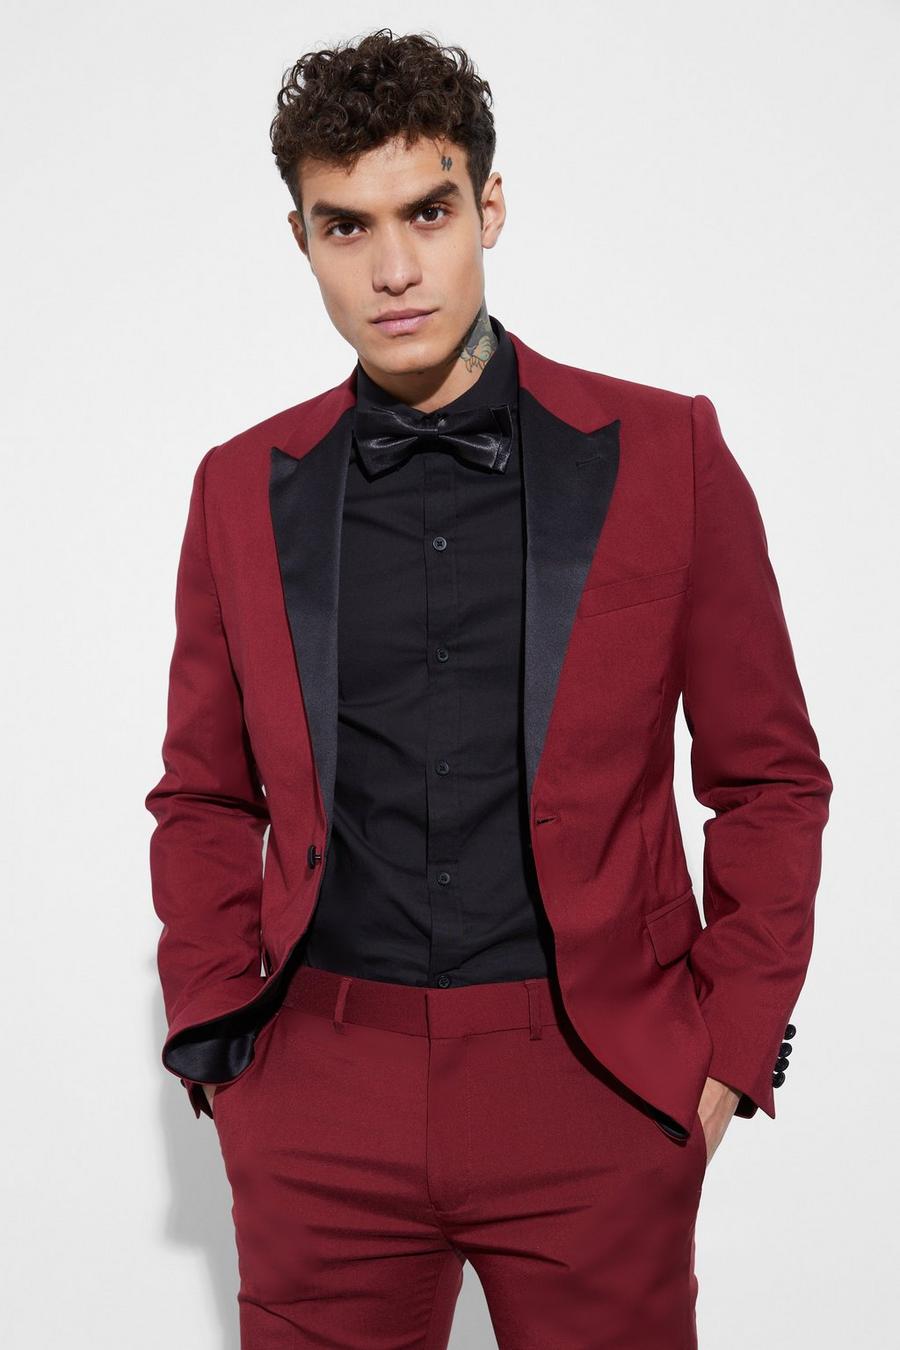 Burgundy red Skinny Tuxedo Single Breasted Suit Jacket